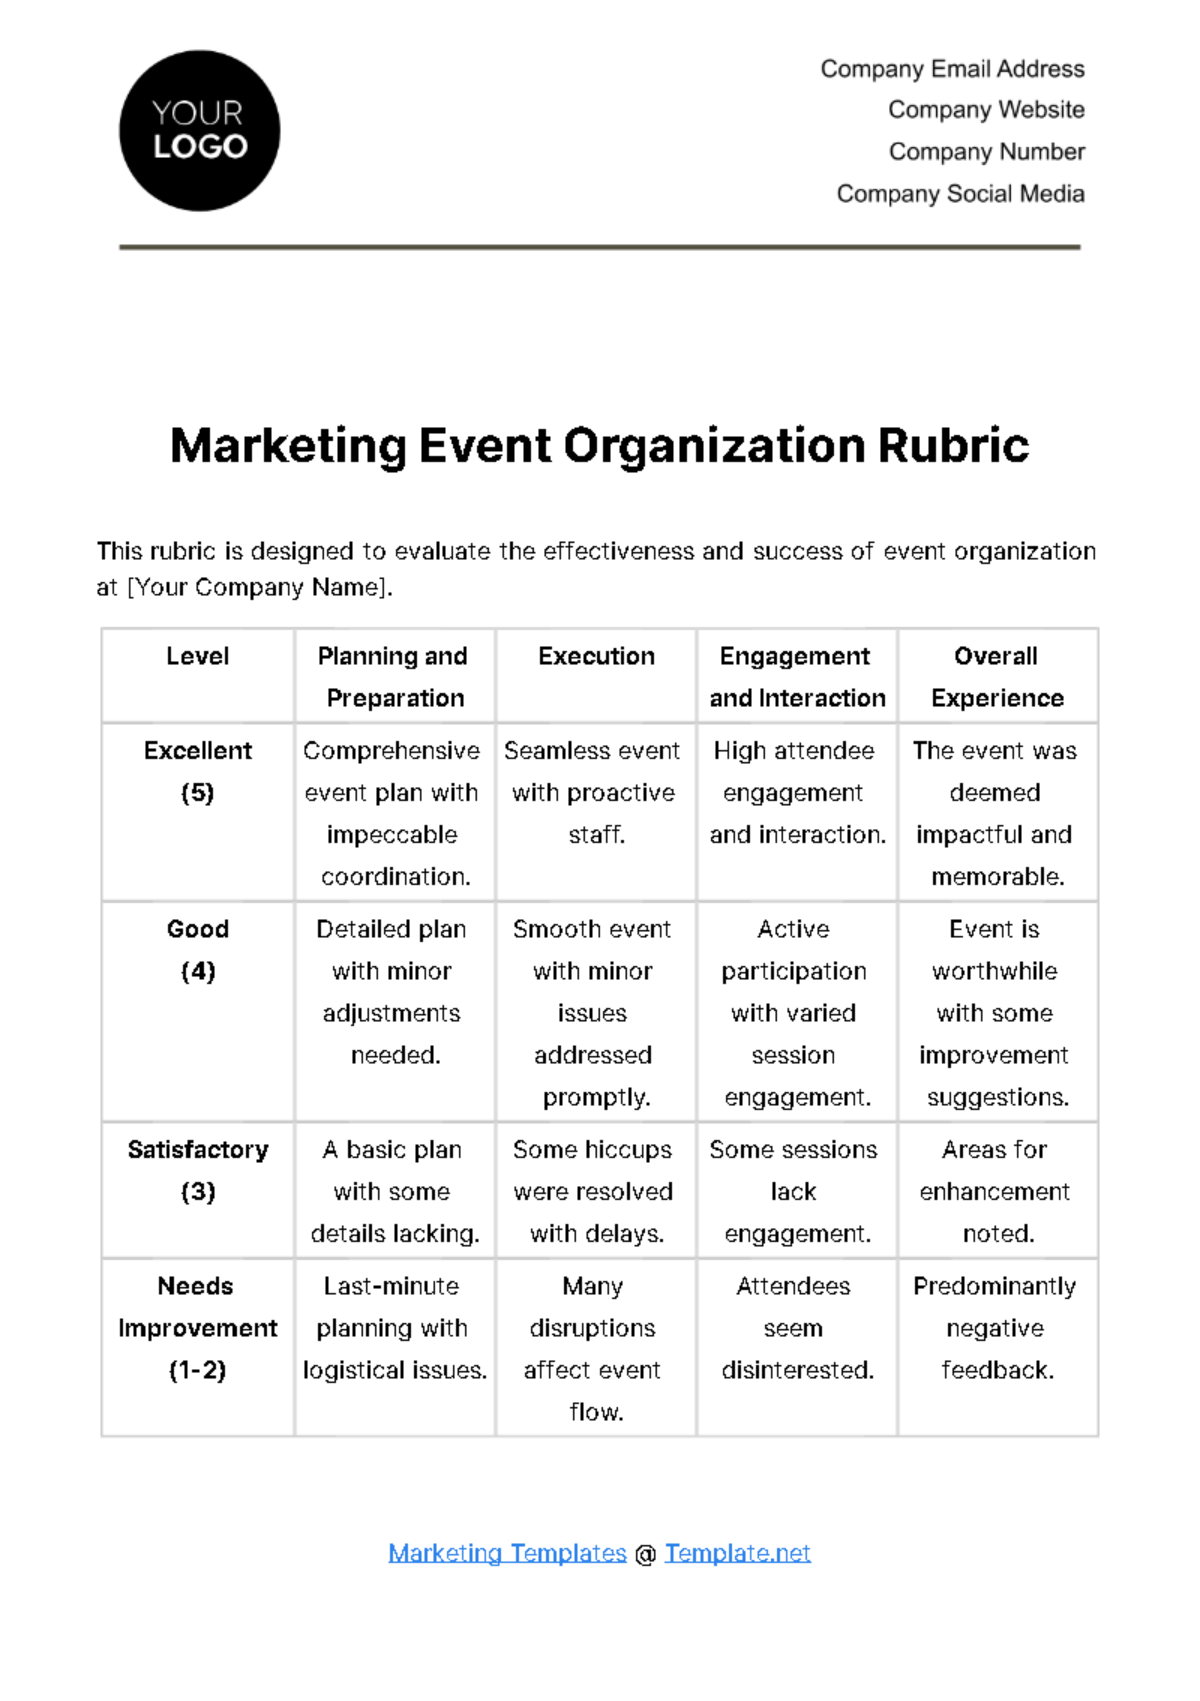 Marketing Event Organization Rubric Template